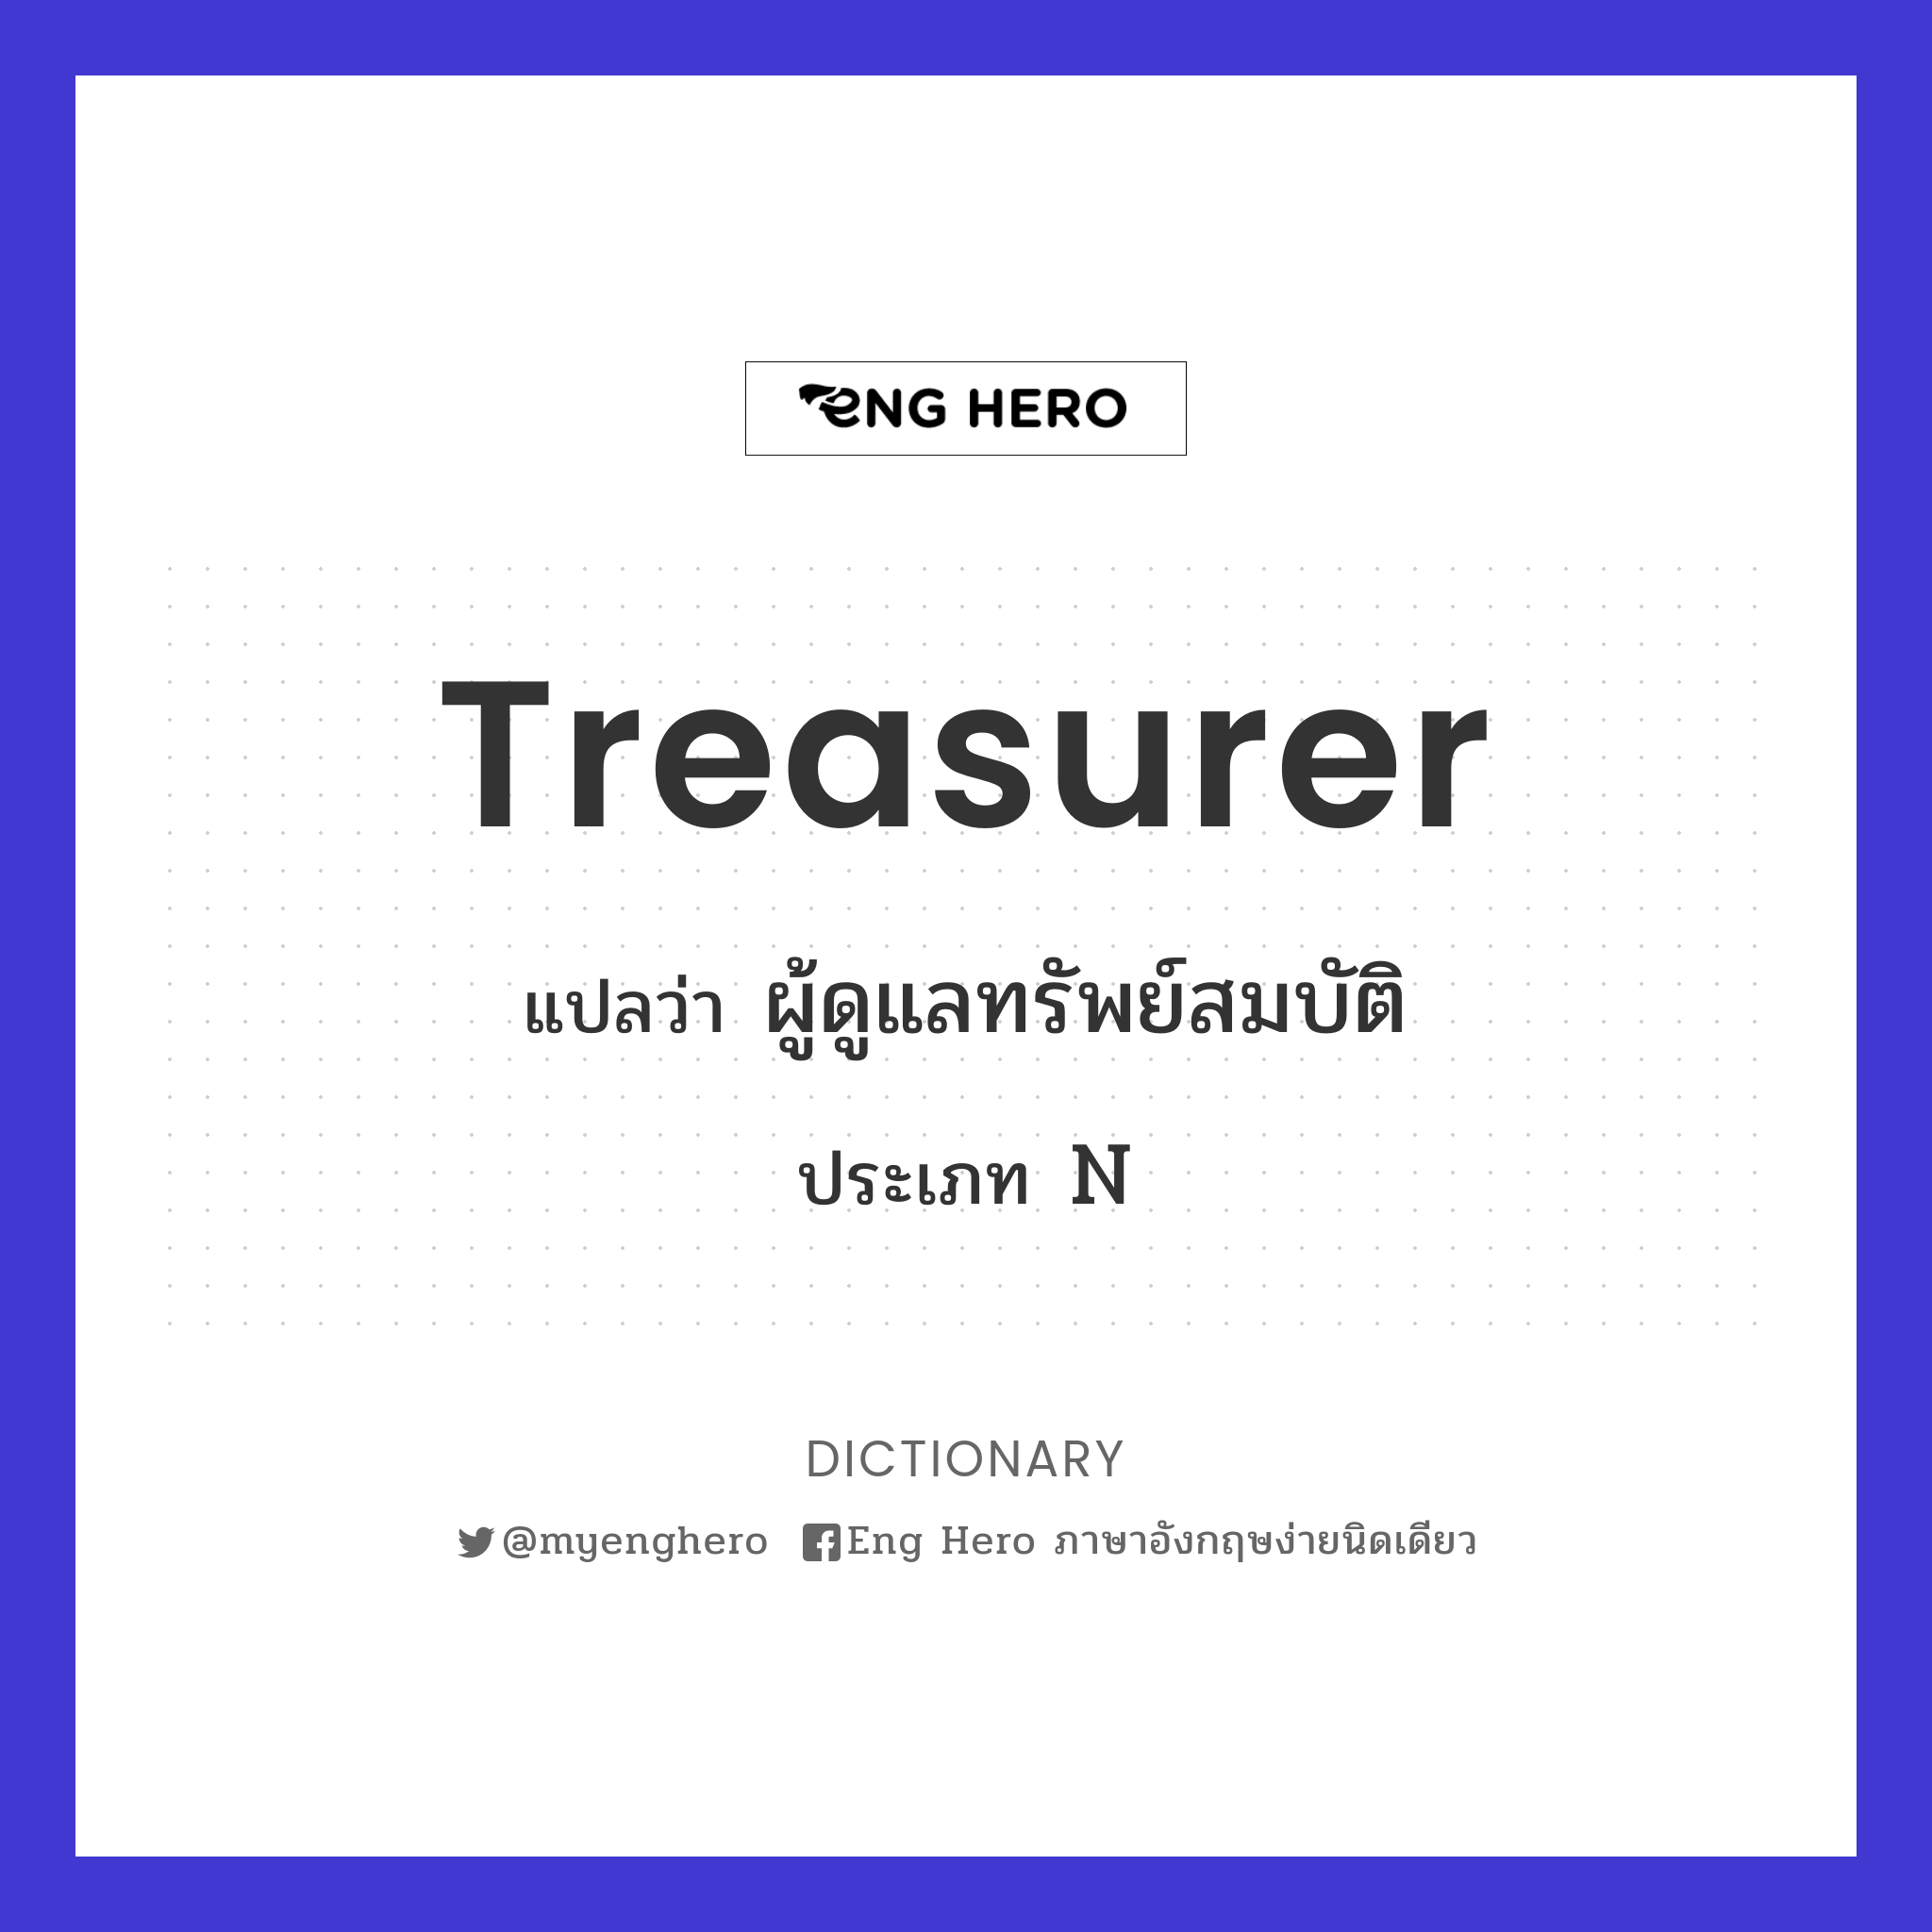 treasurer